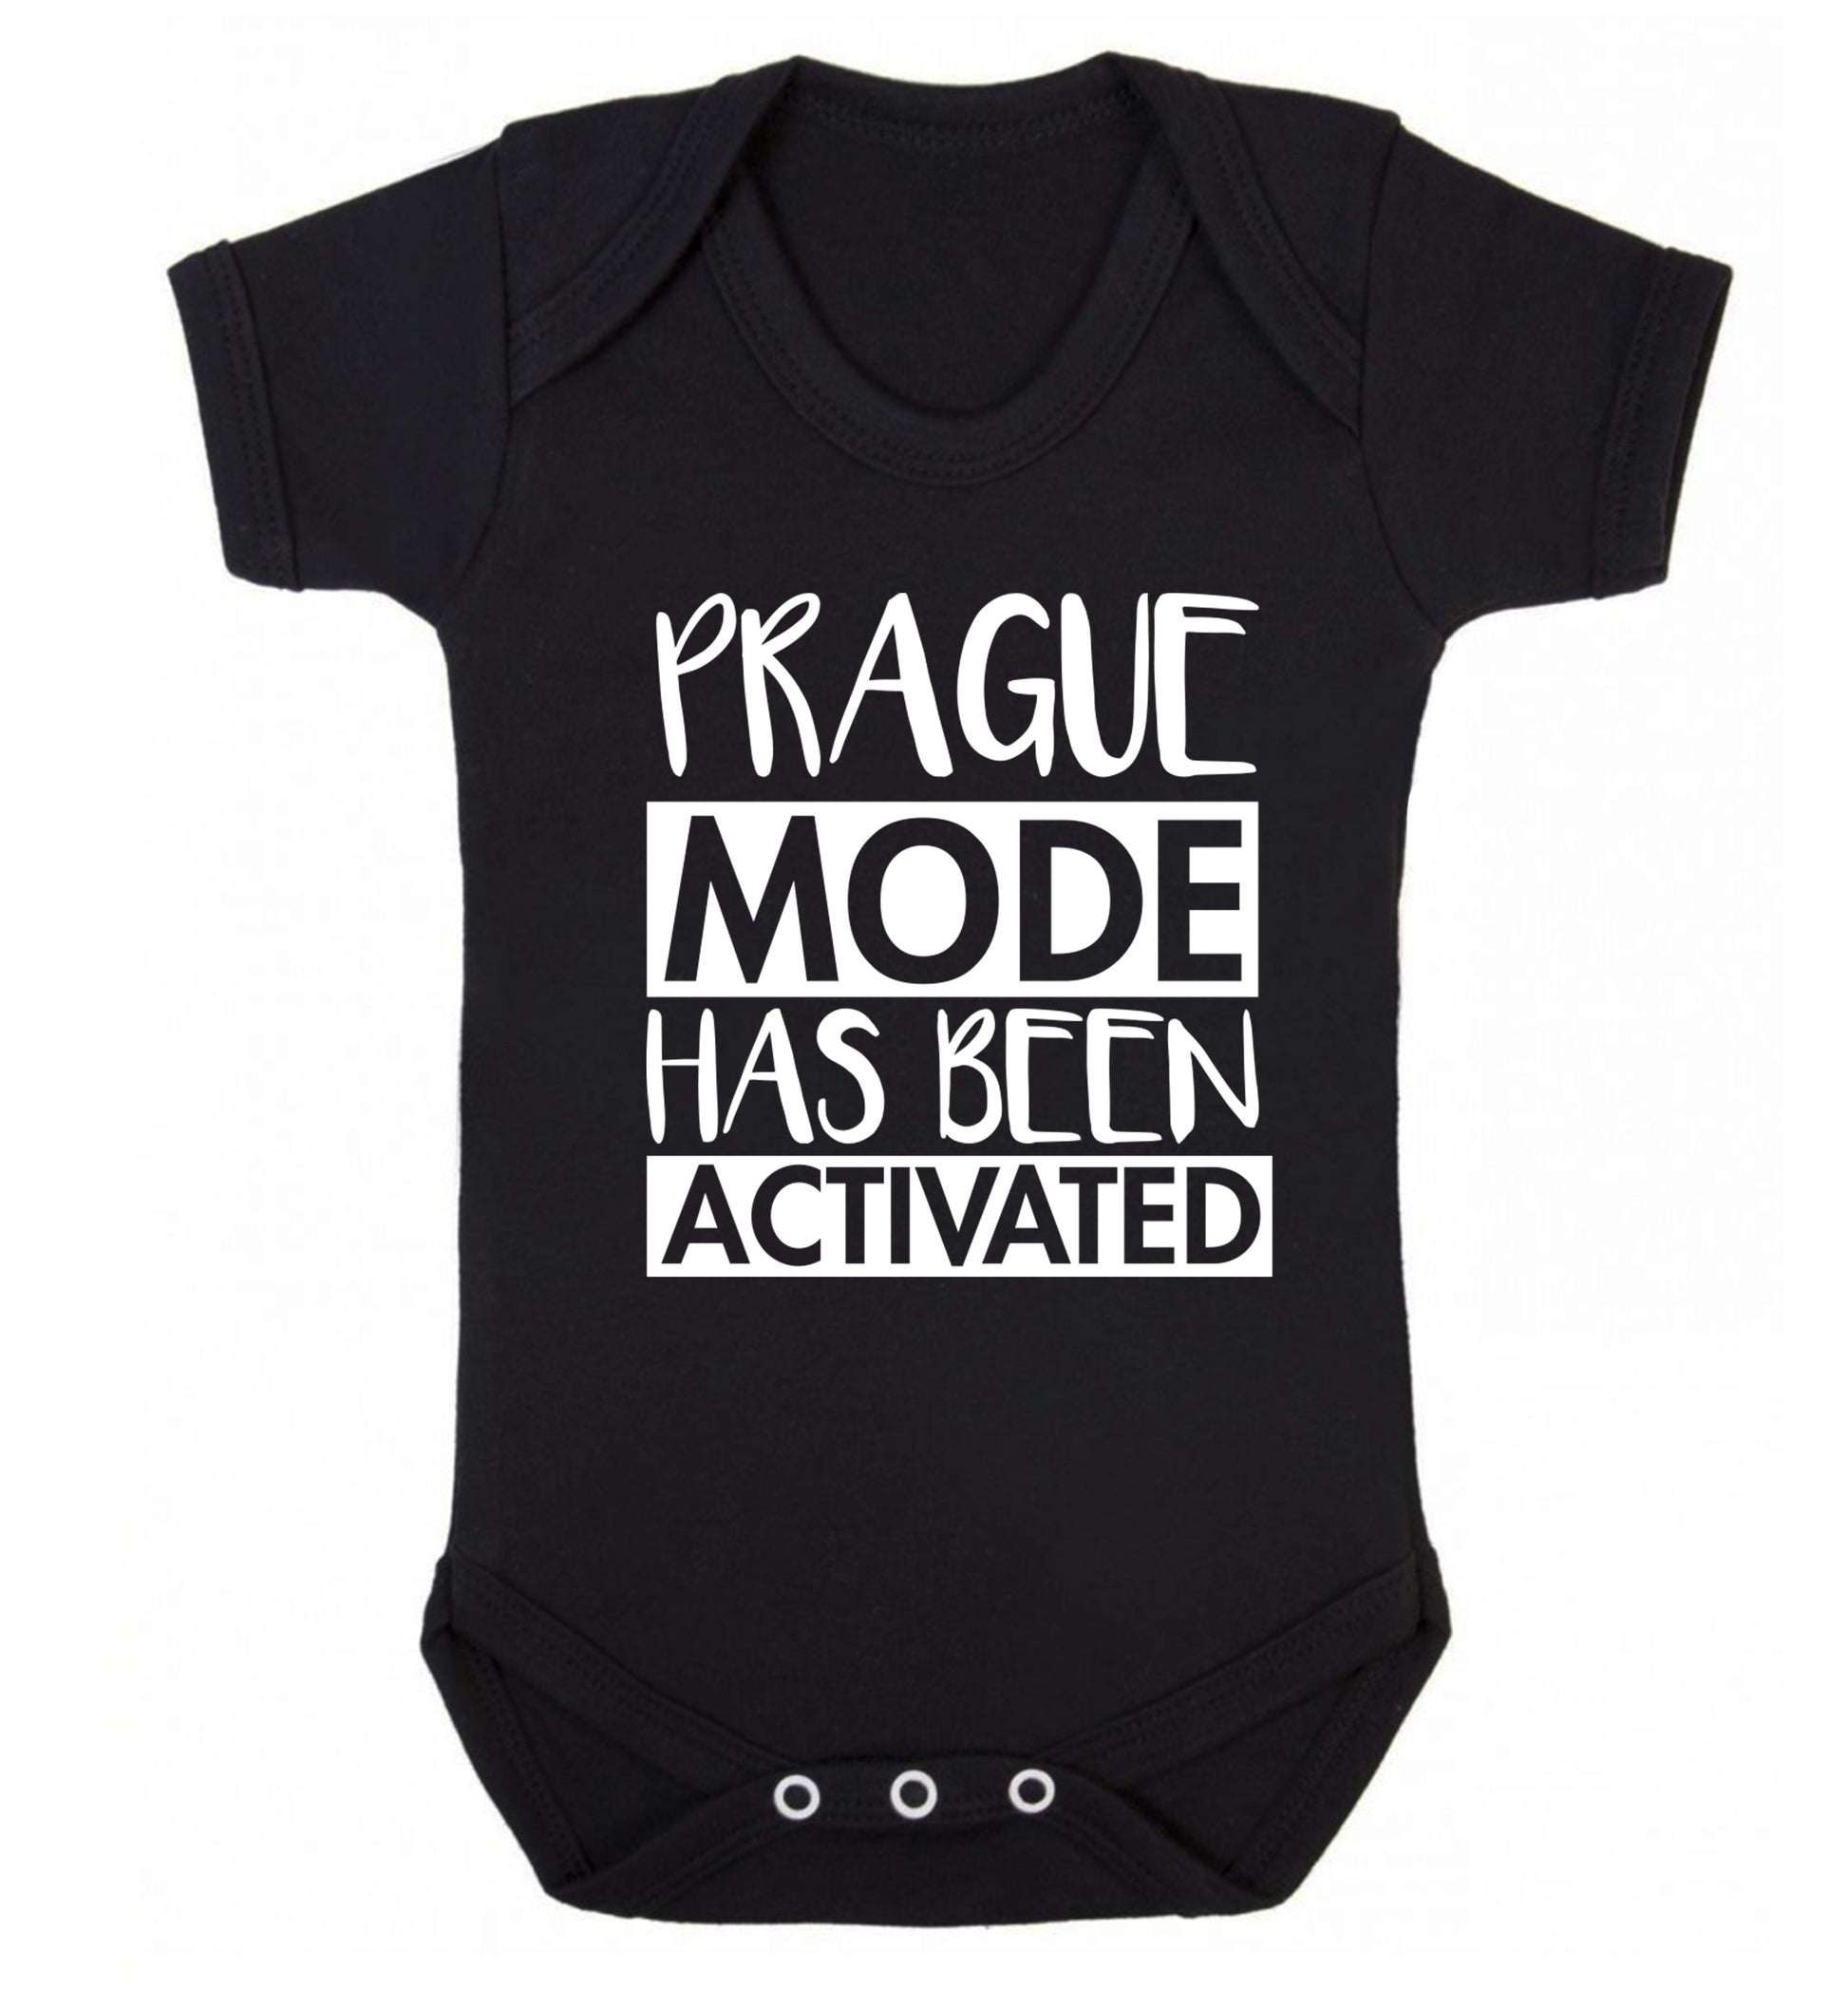 Prague mode has been activated Baby Vest black 18-24 months